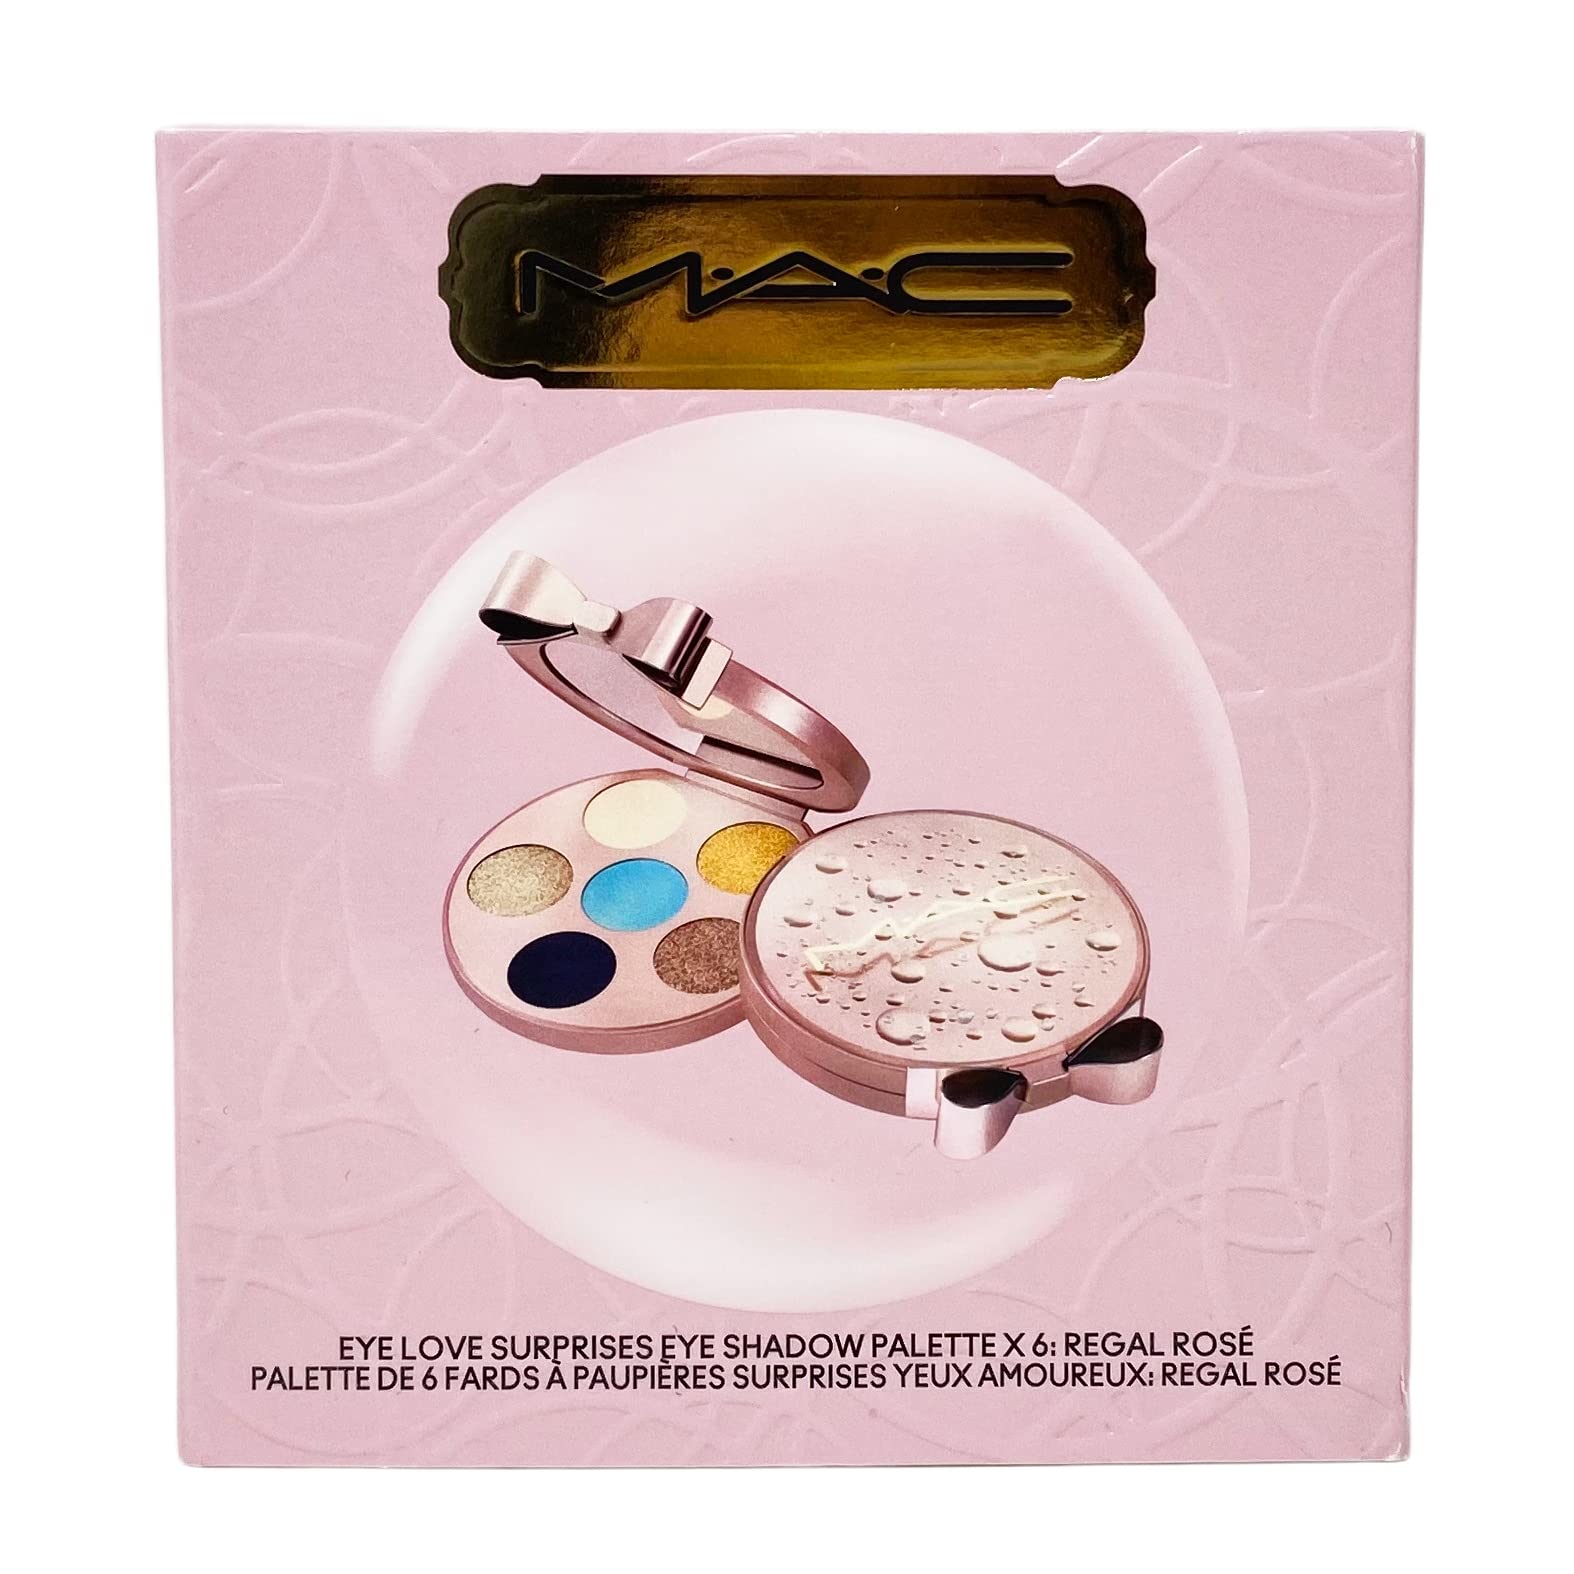 M.A.C. Limited Edition Eye Love Surprises Eye Shadow Palette x 6: Regal Rose